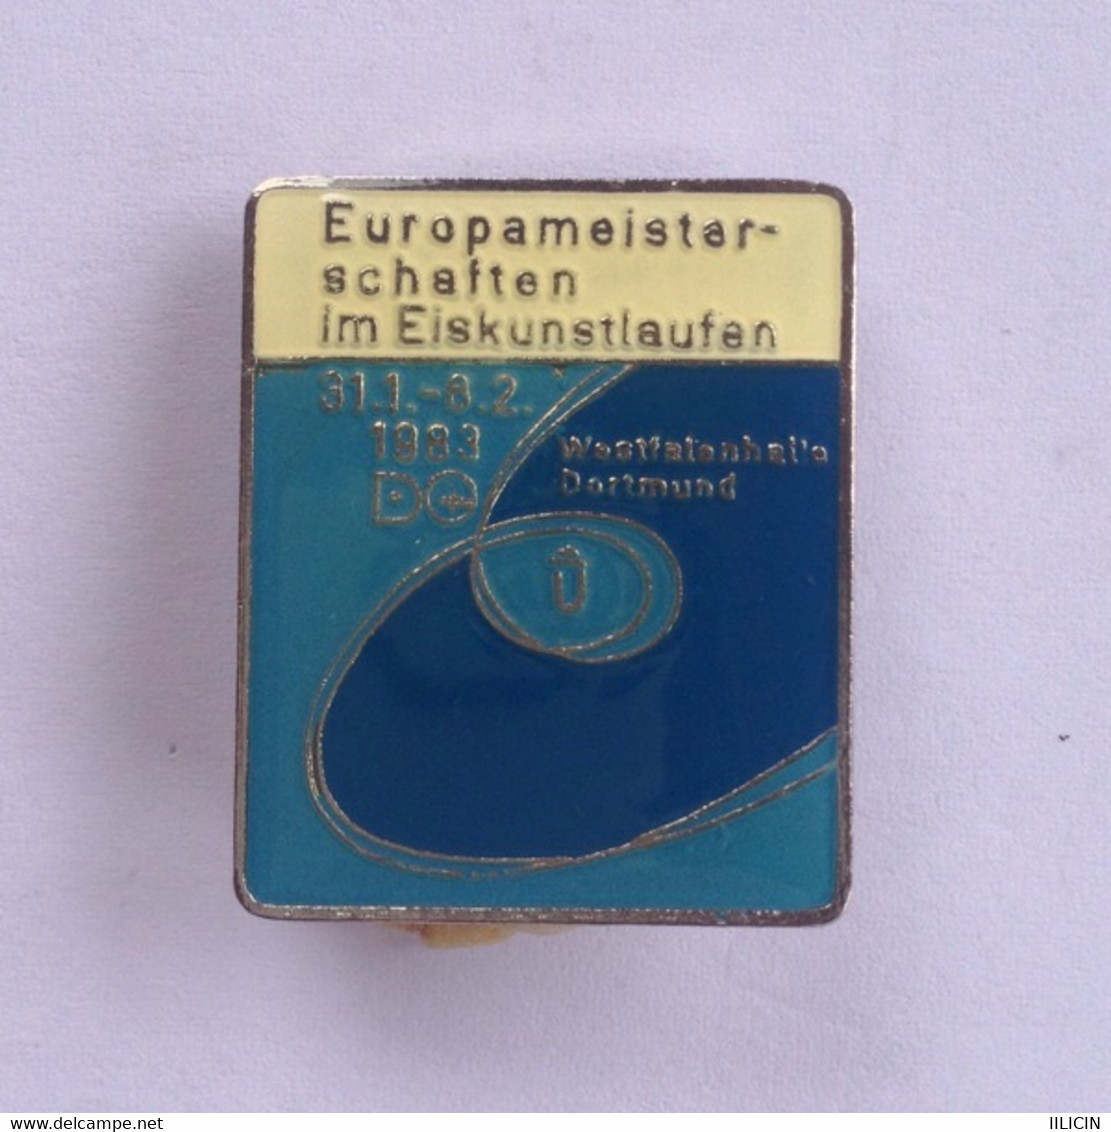 Badge Pin ZN000019 - Ice Skating Germany (Deutschland) Dortmund European Championship 1983 - Eiskunstlauf